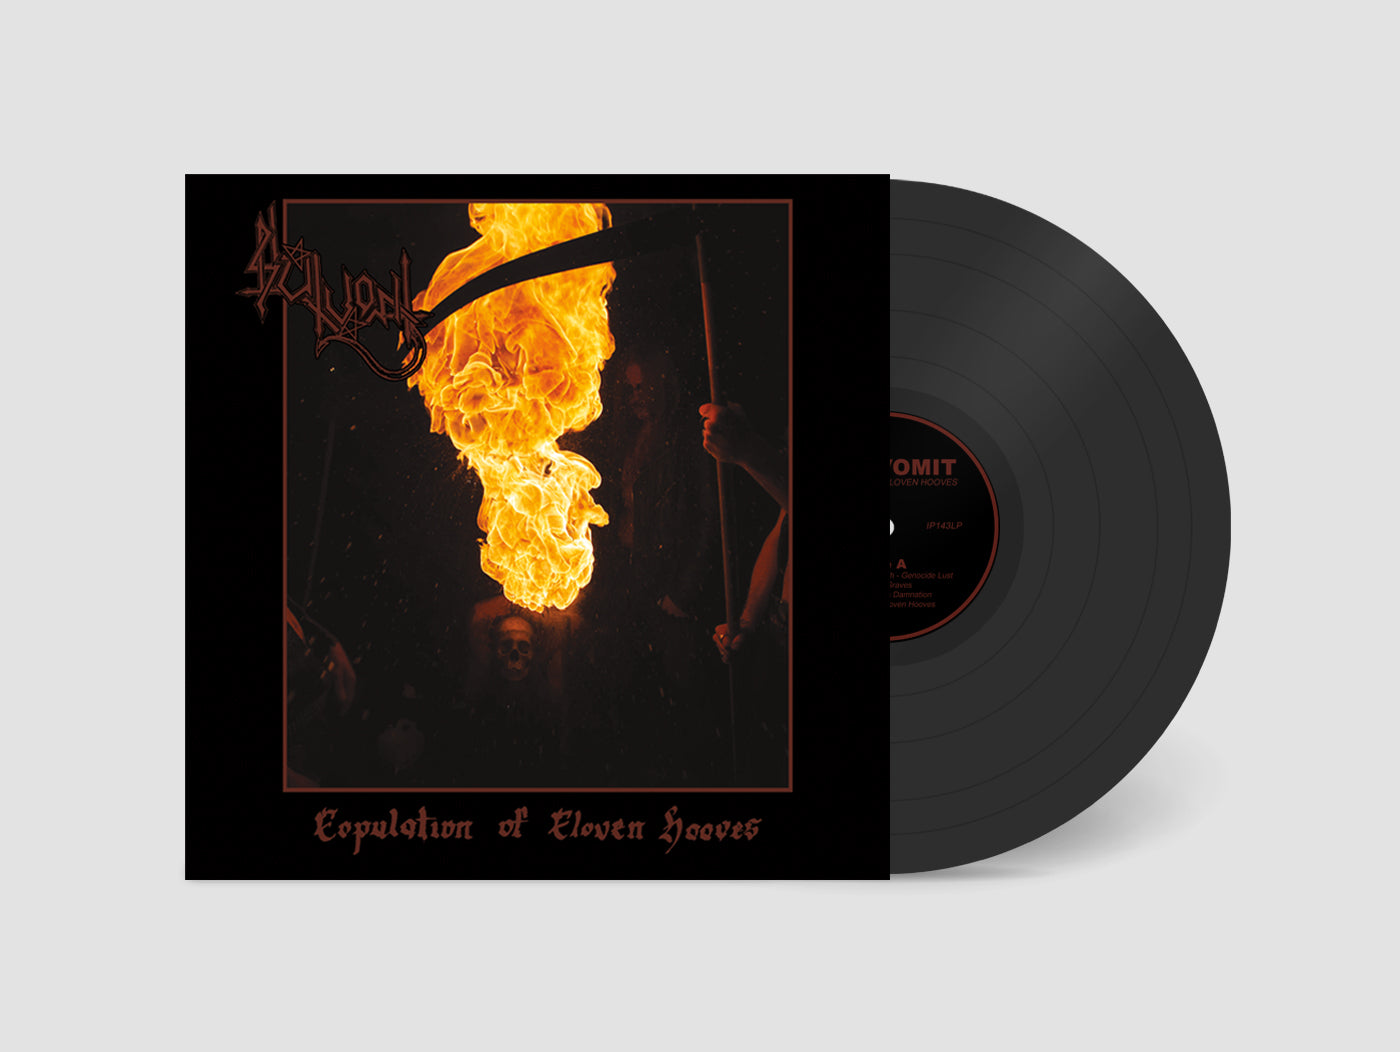 Slutvomit - Copulation of Cloven Hooves LP (black vinyl)